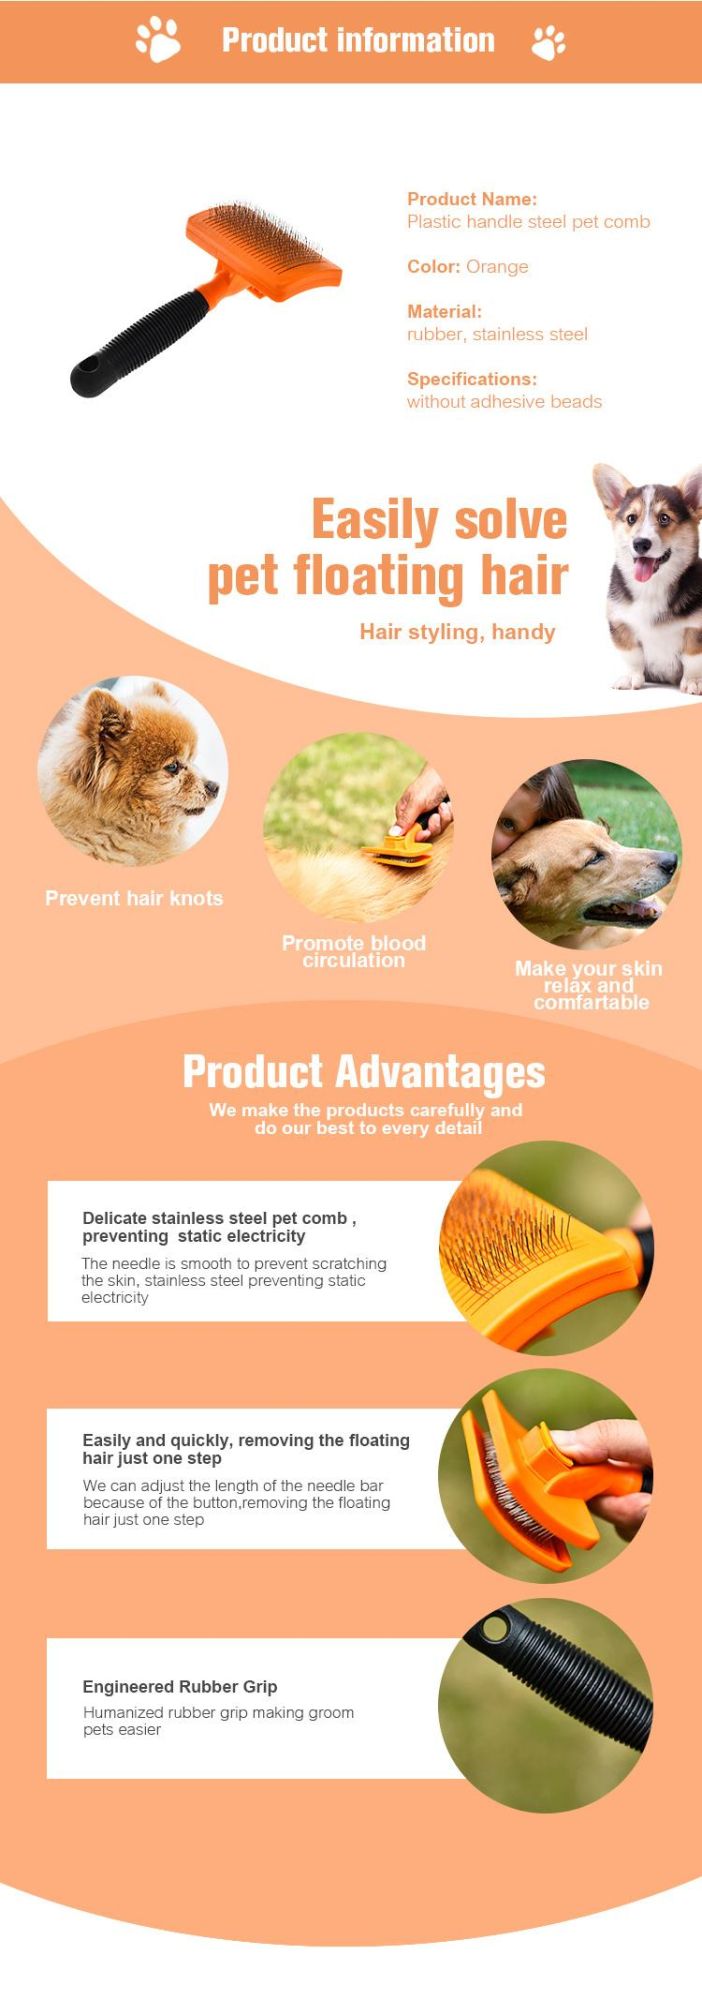 Hot Selling Personalized Pet Hair Brush, Pet Grooming Supplies